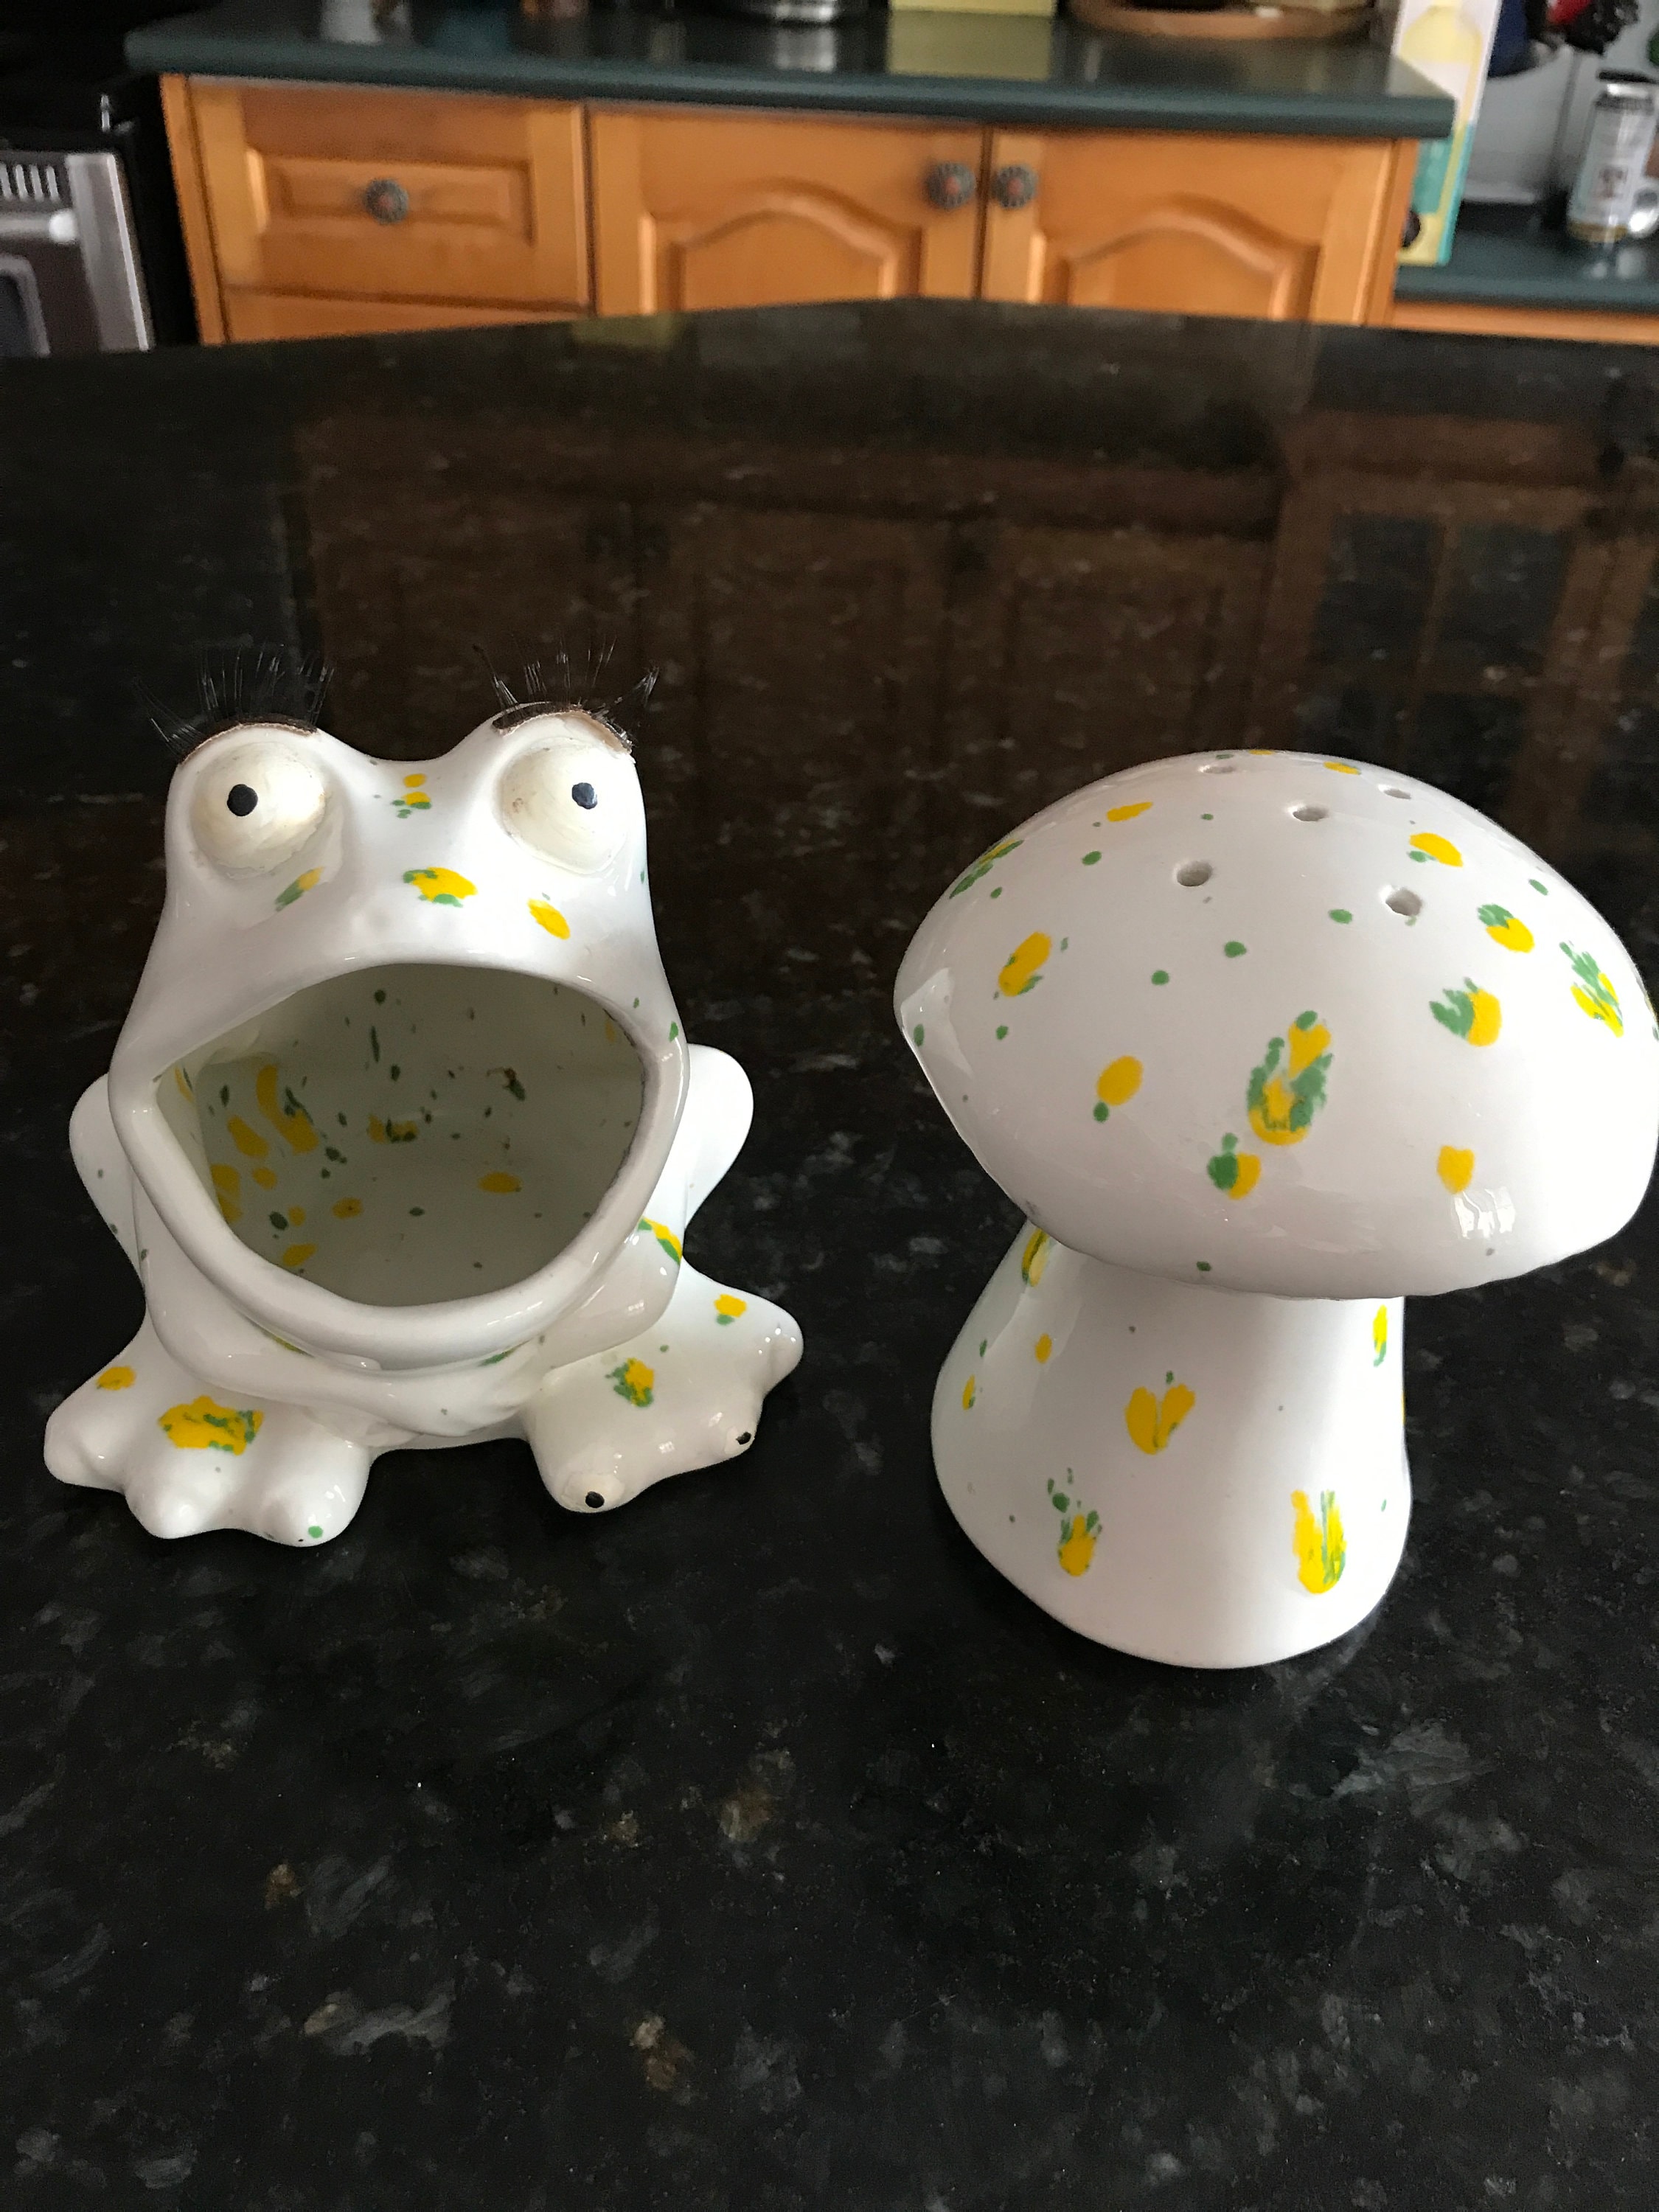 PEHOST Ceramic Kitchen Scrubby Sponge Holder Art Frog Collection Adorable Home & Kitchen Decor